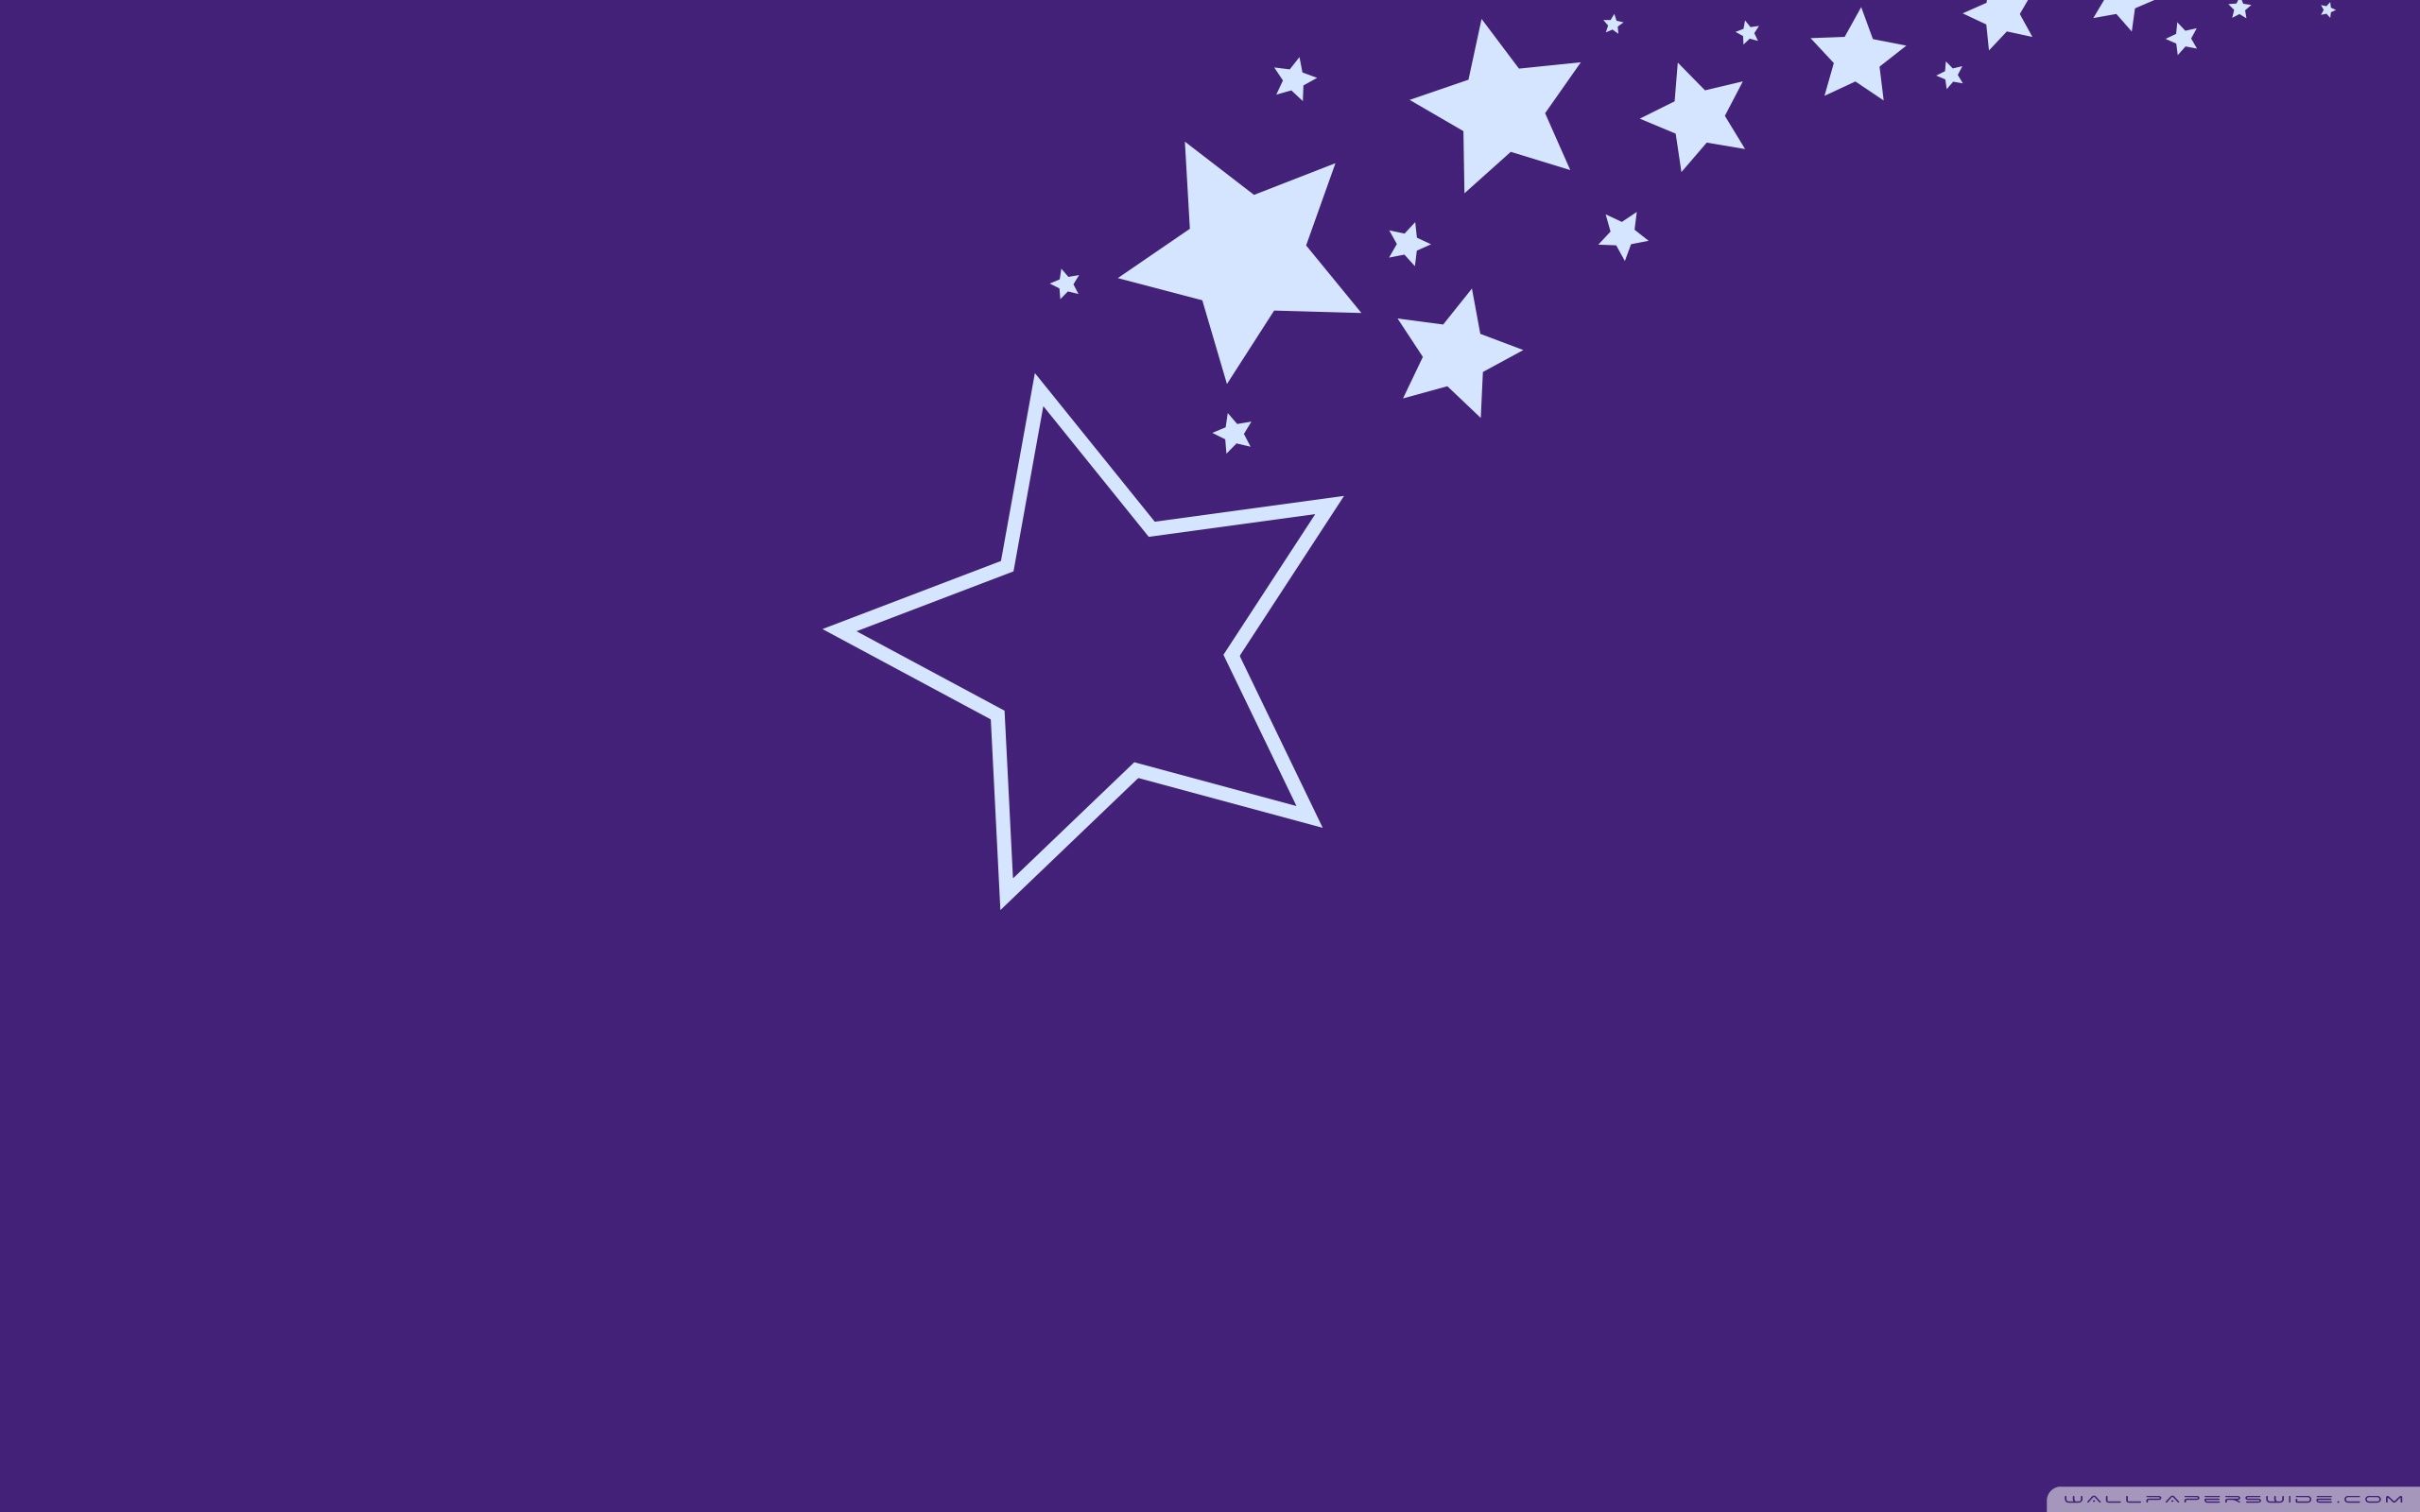 Download Stars Purple Background UltraHD Wallpaper